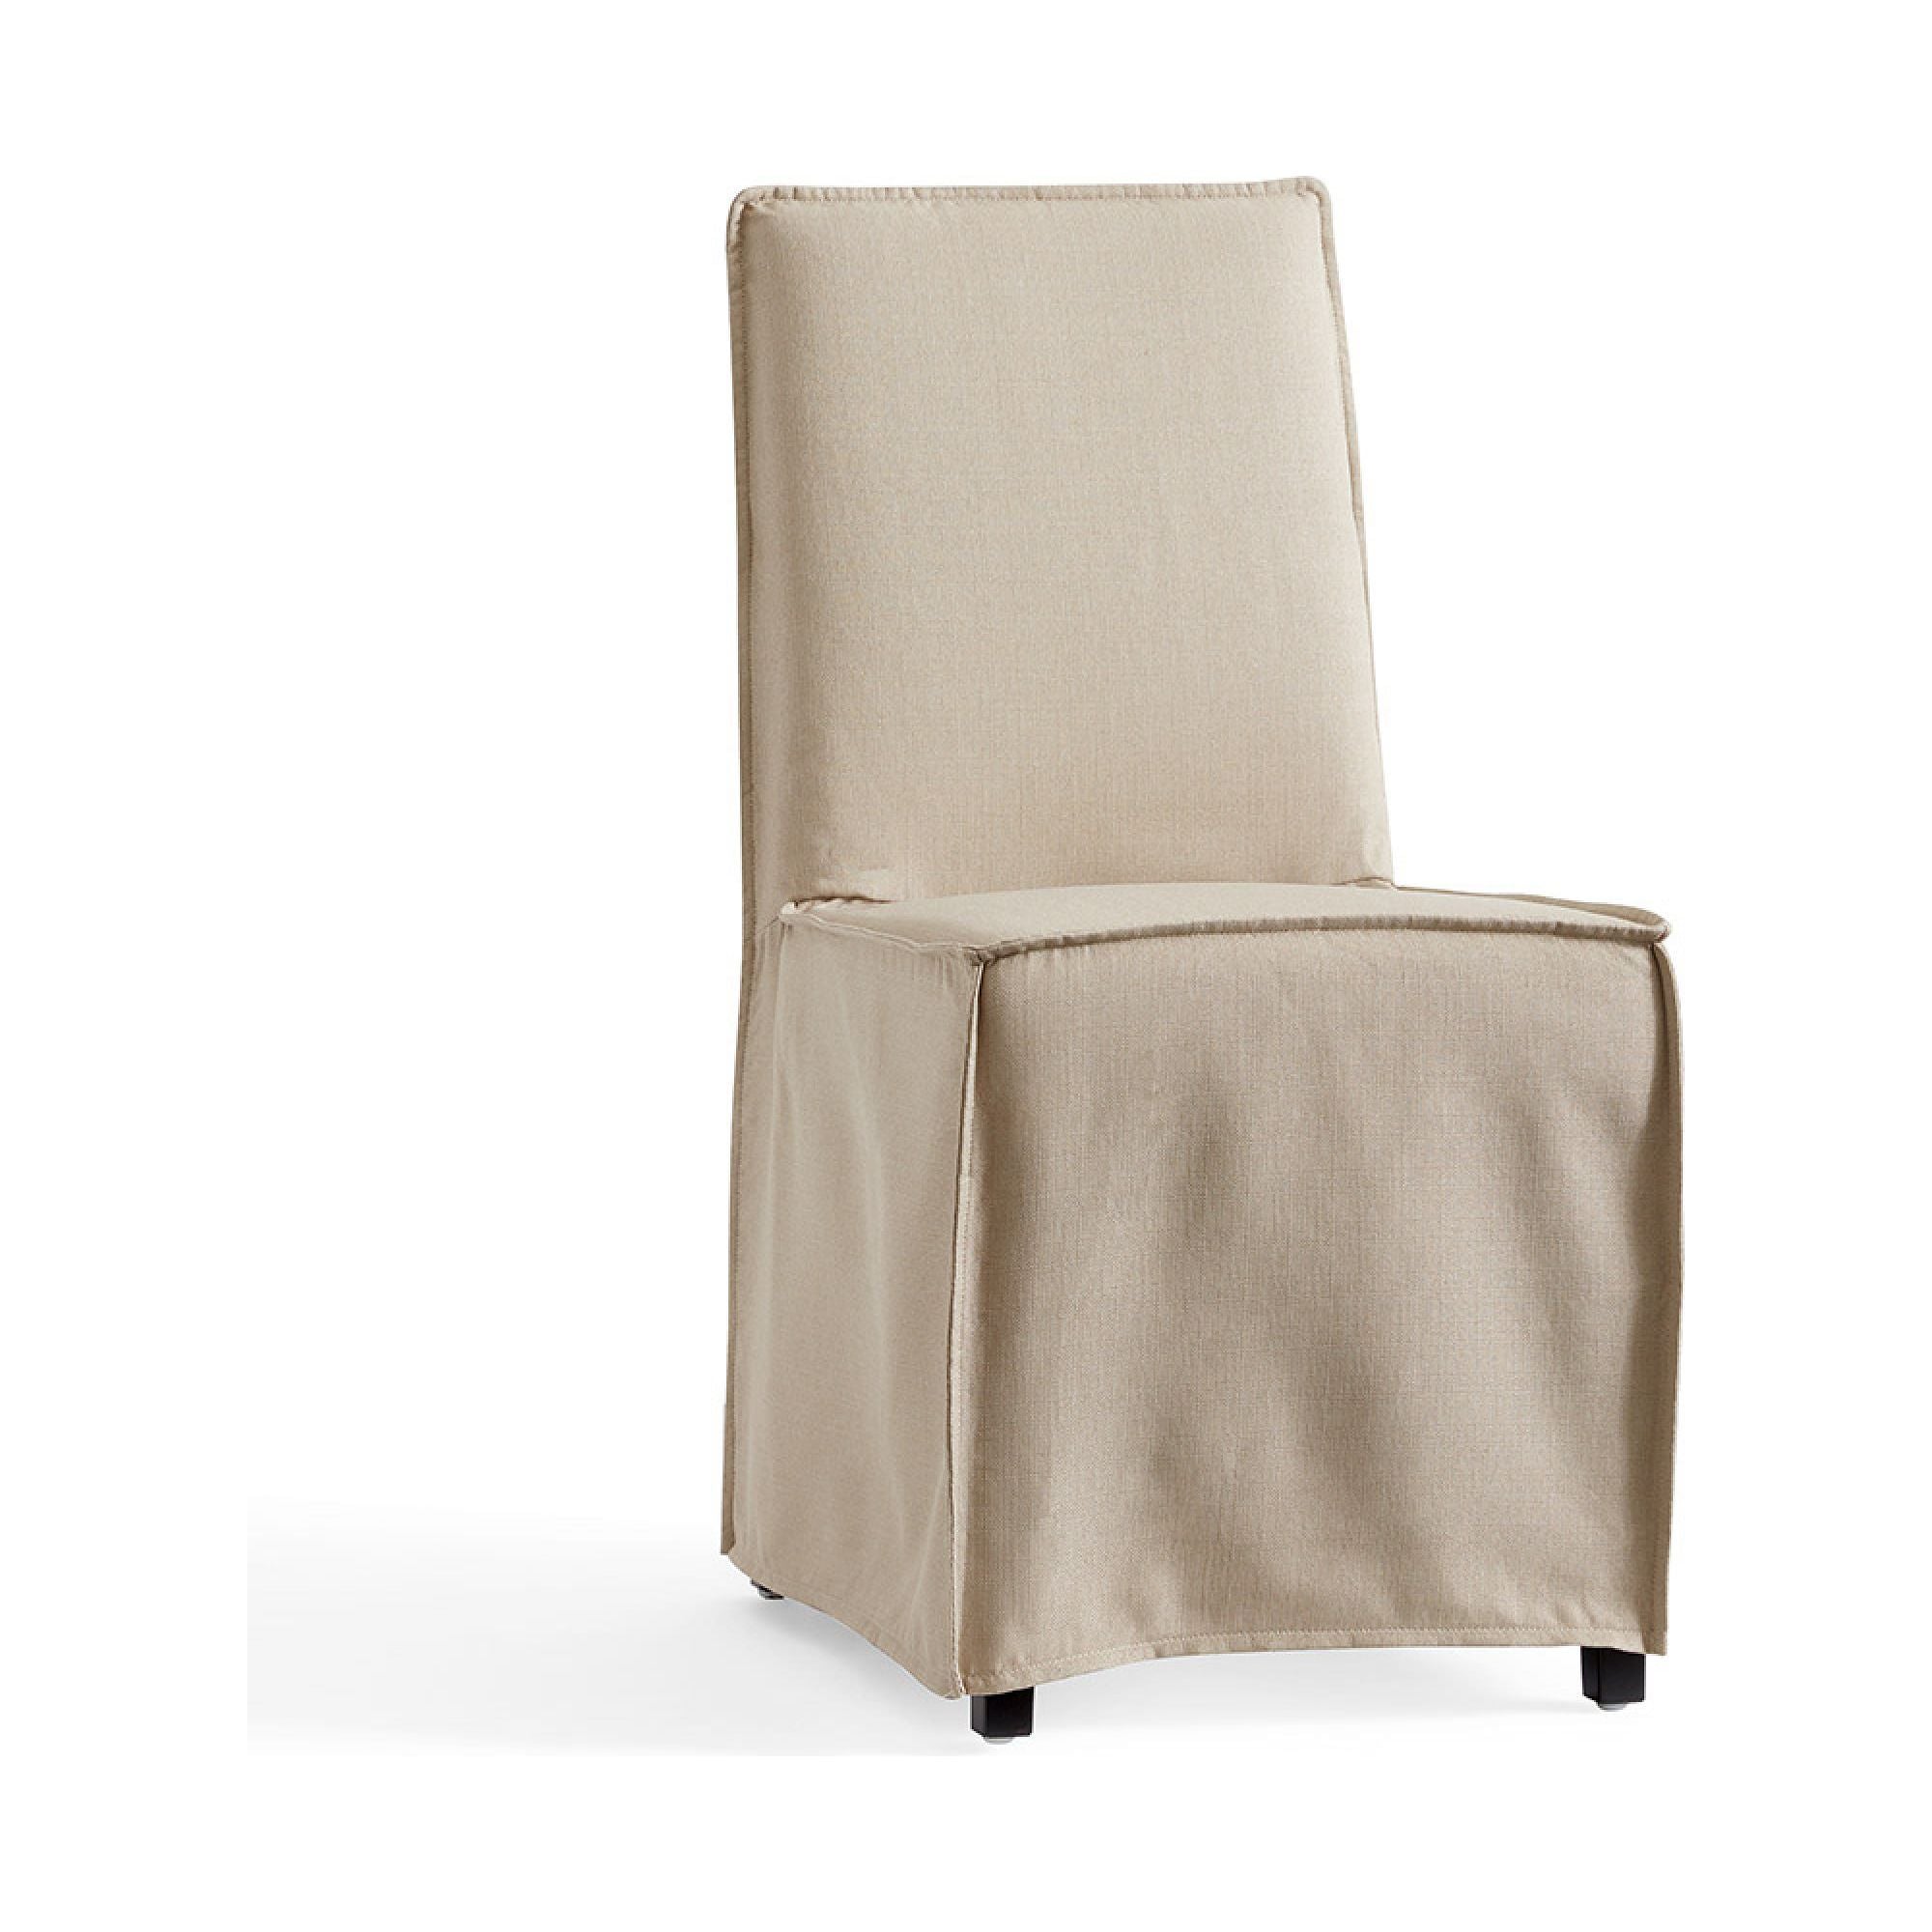 Pottery Barn Carissa Chair Slip Cover -  Natural